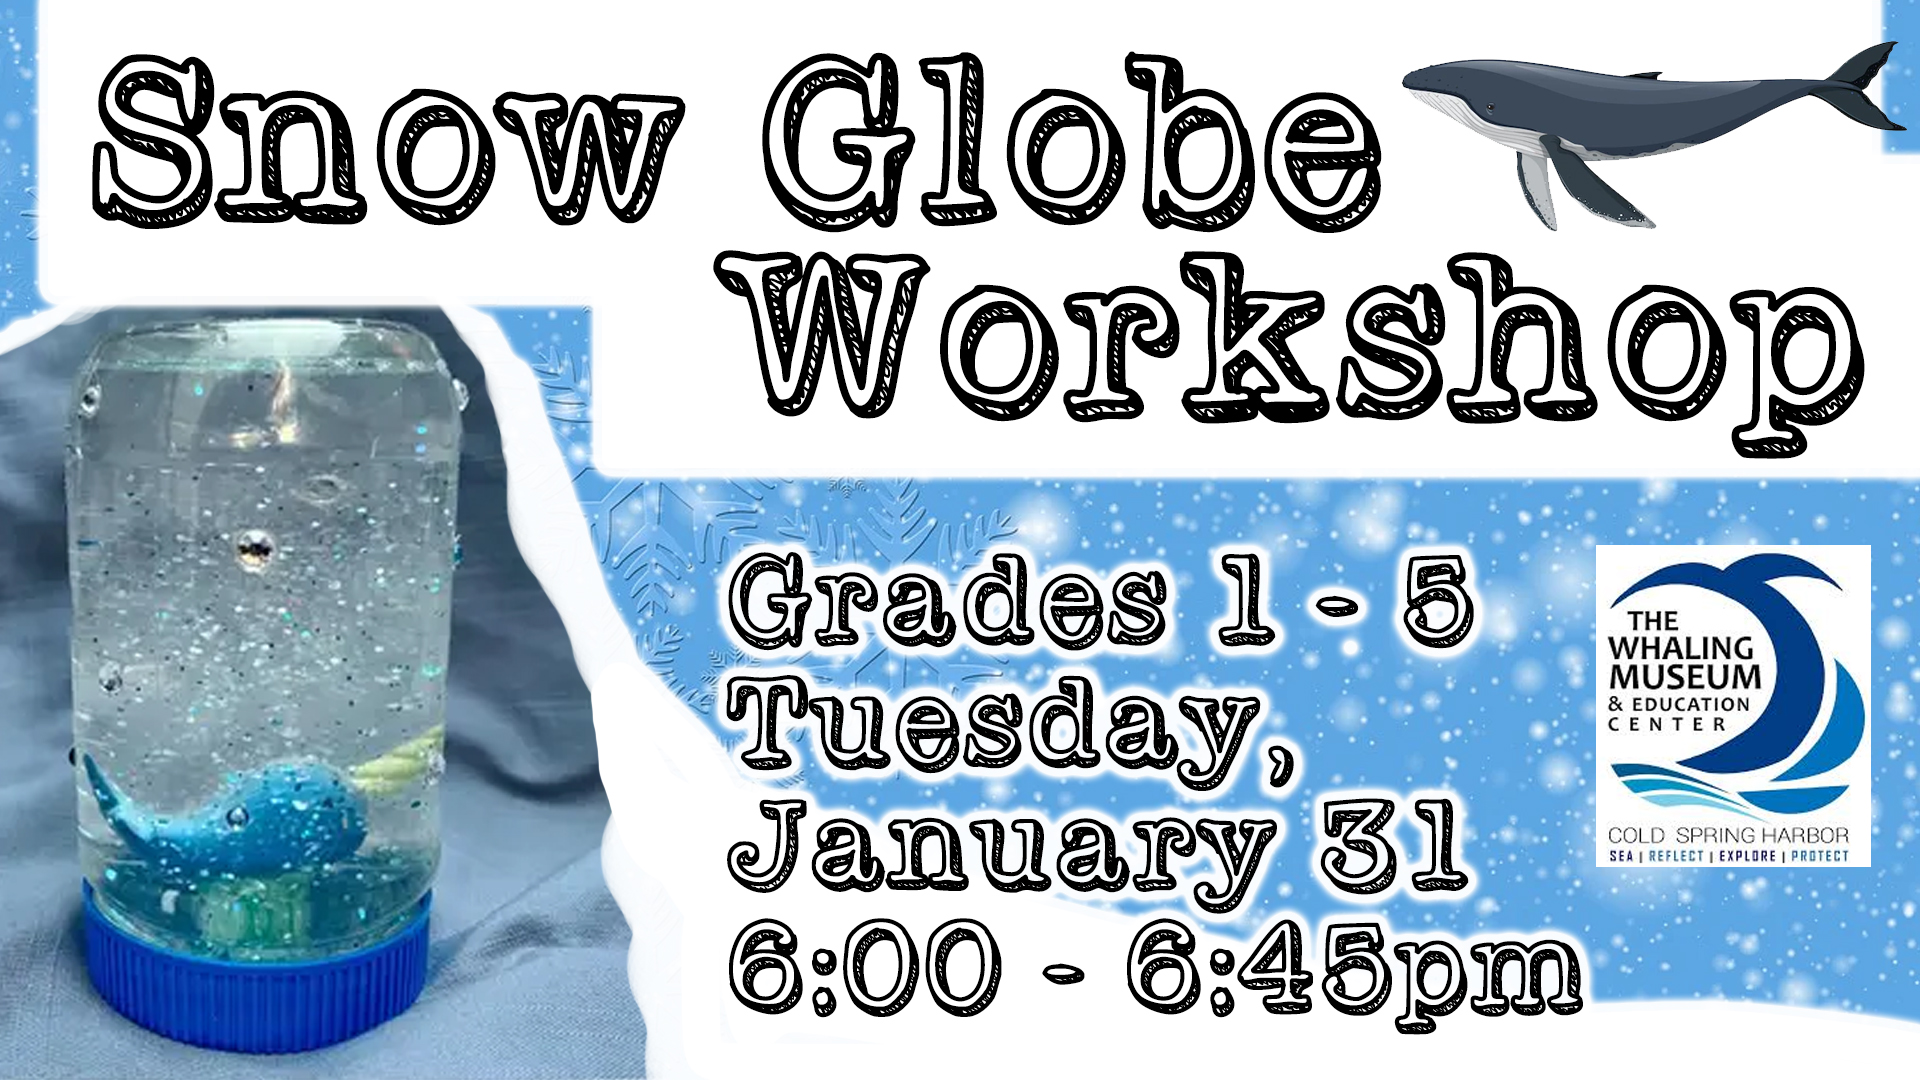 Snow Globe Workshop